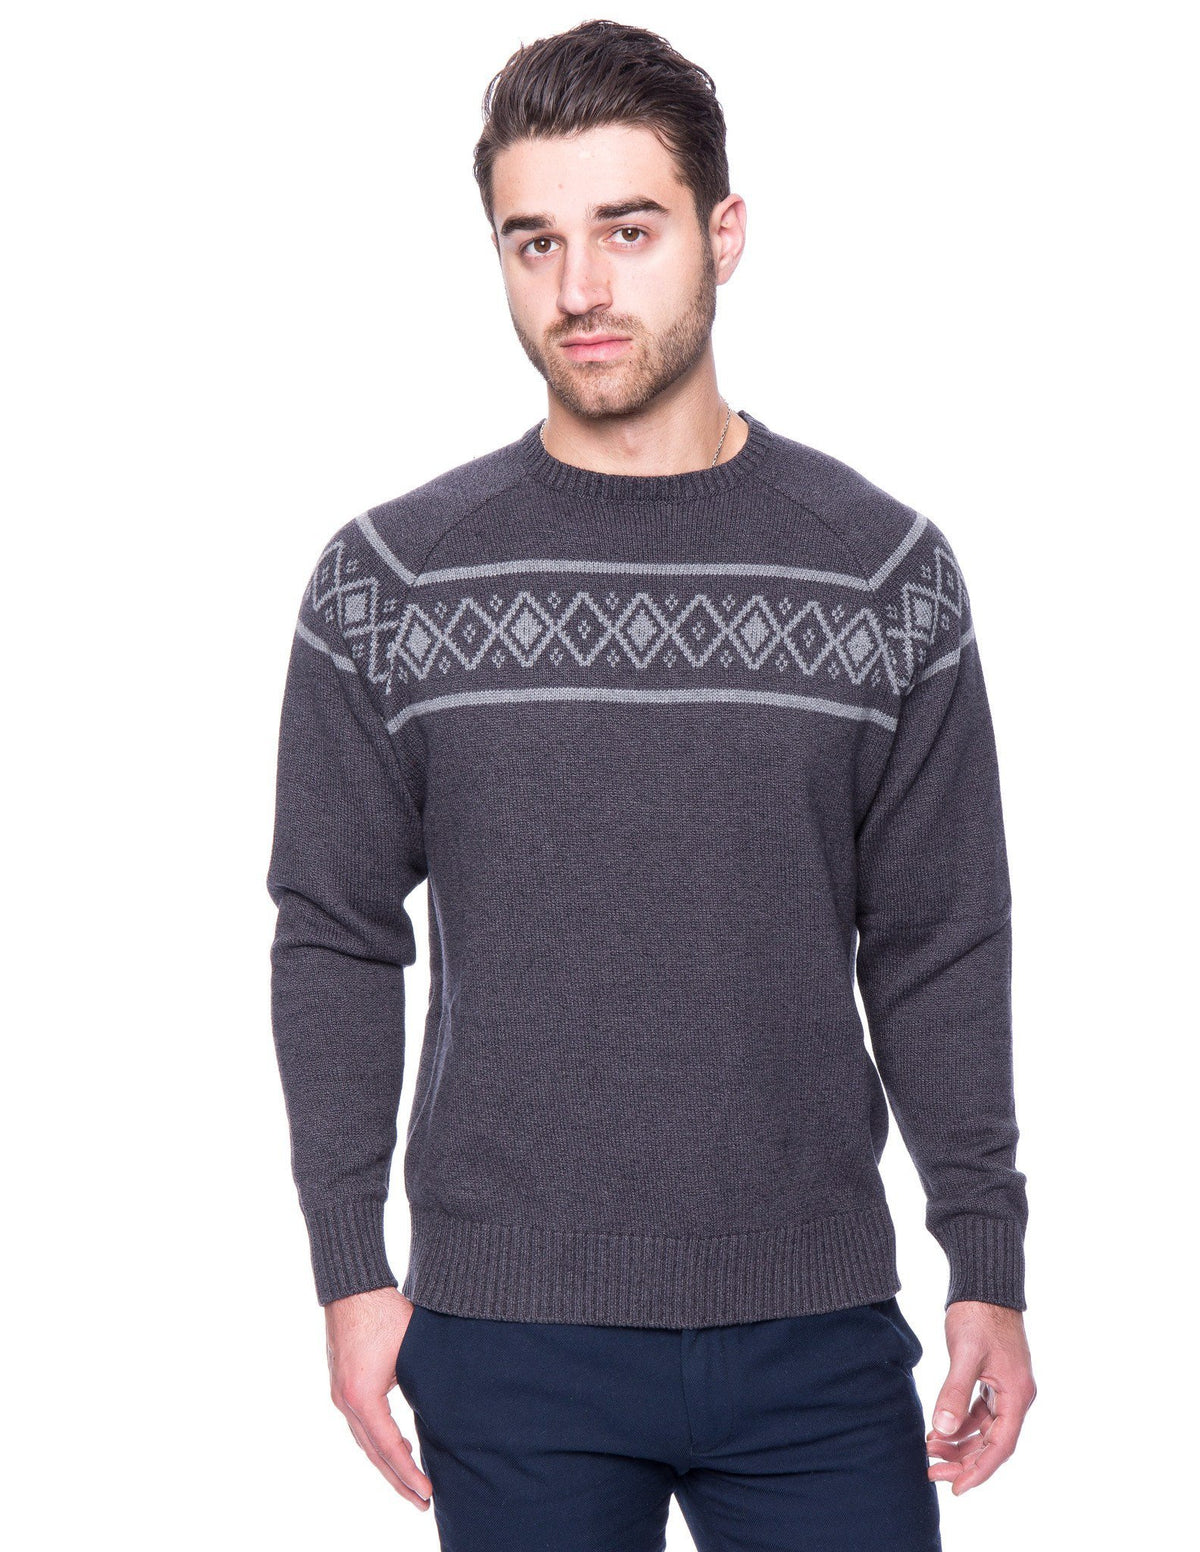 Men's 100% Cotton Crew Neck Sweater with Fair Isle Stripe - Marl Charcoal/Black